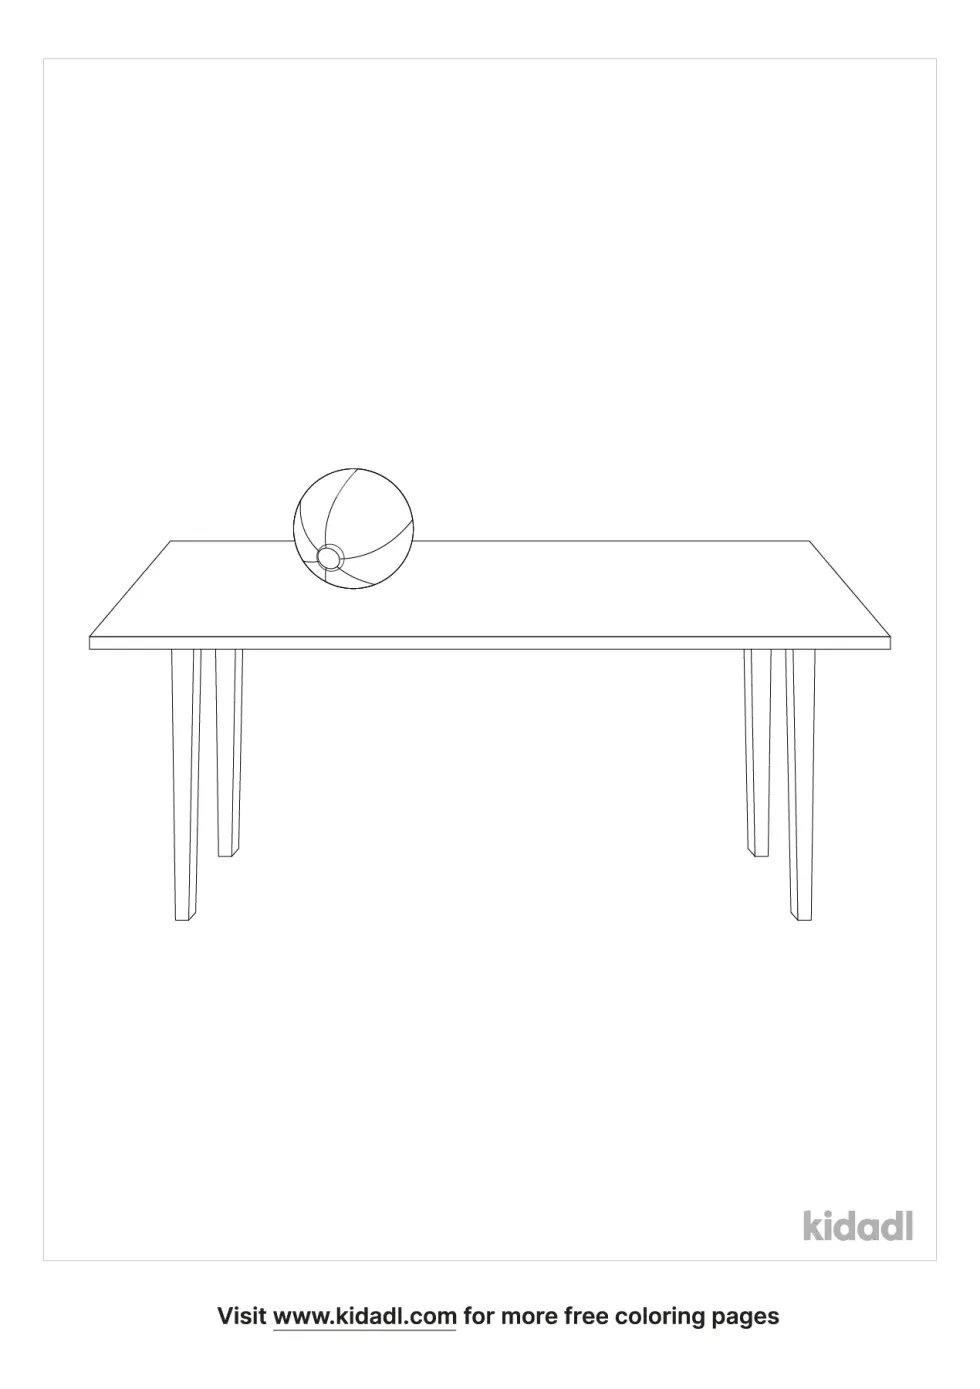 Ball Over Table